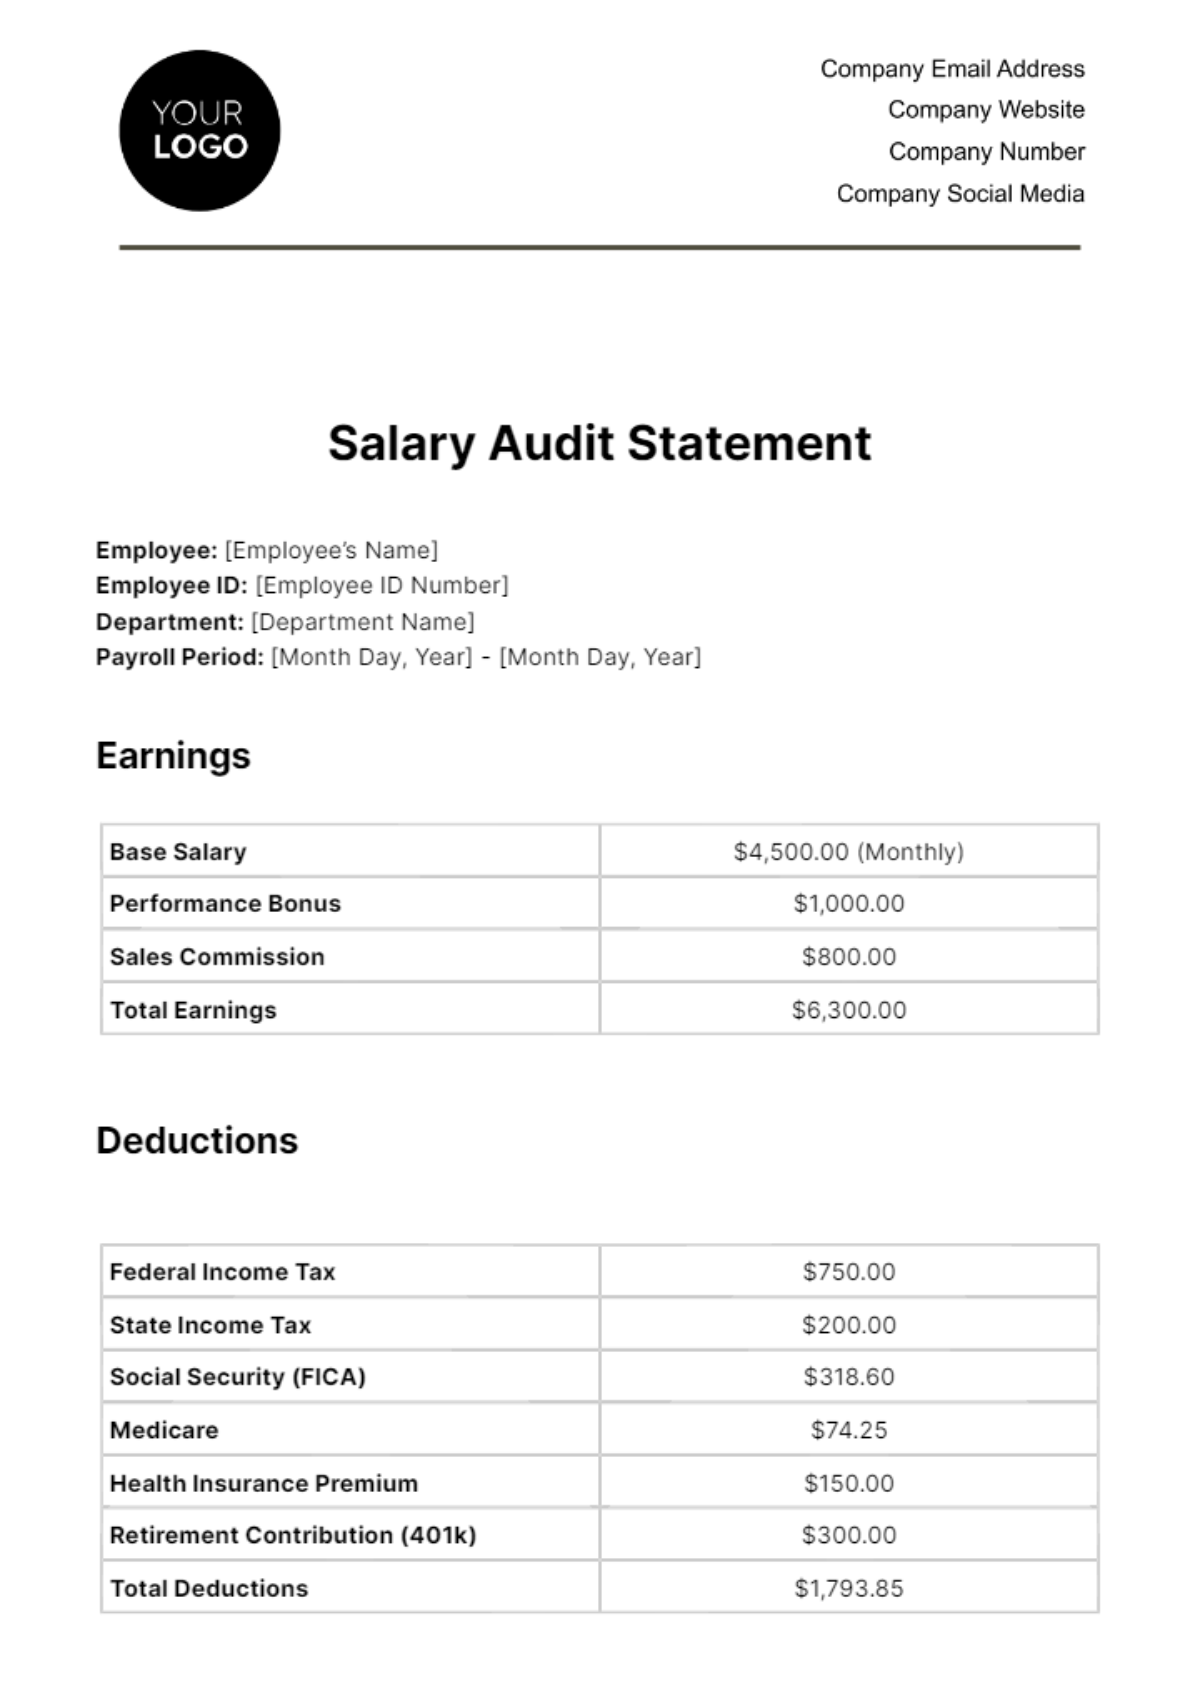 Free Salary Audit Statement HR Template